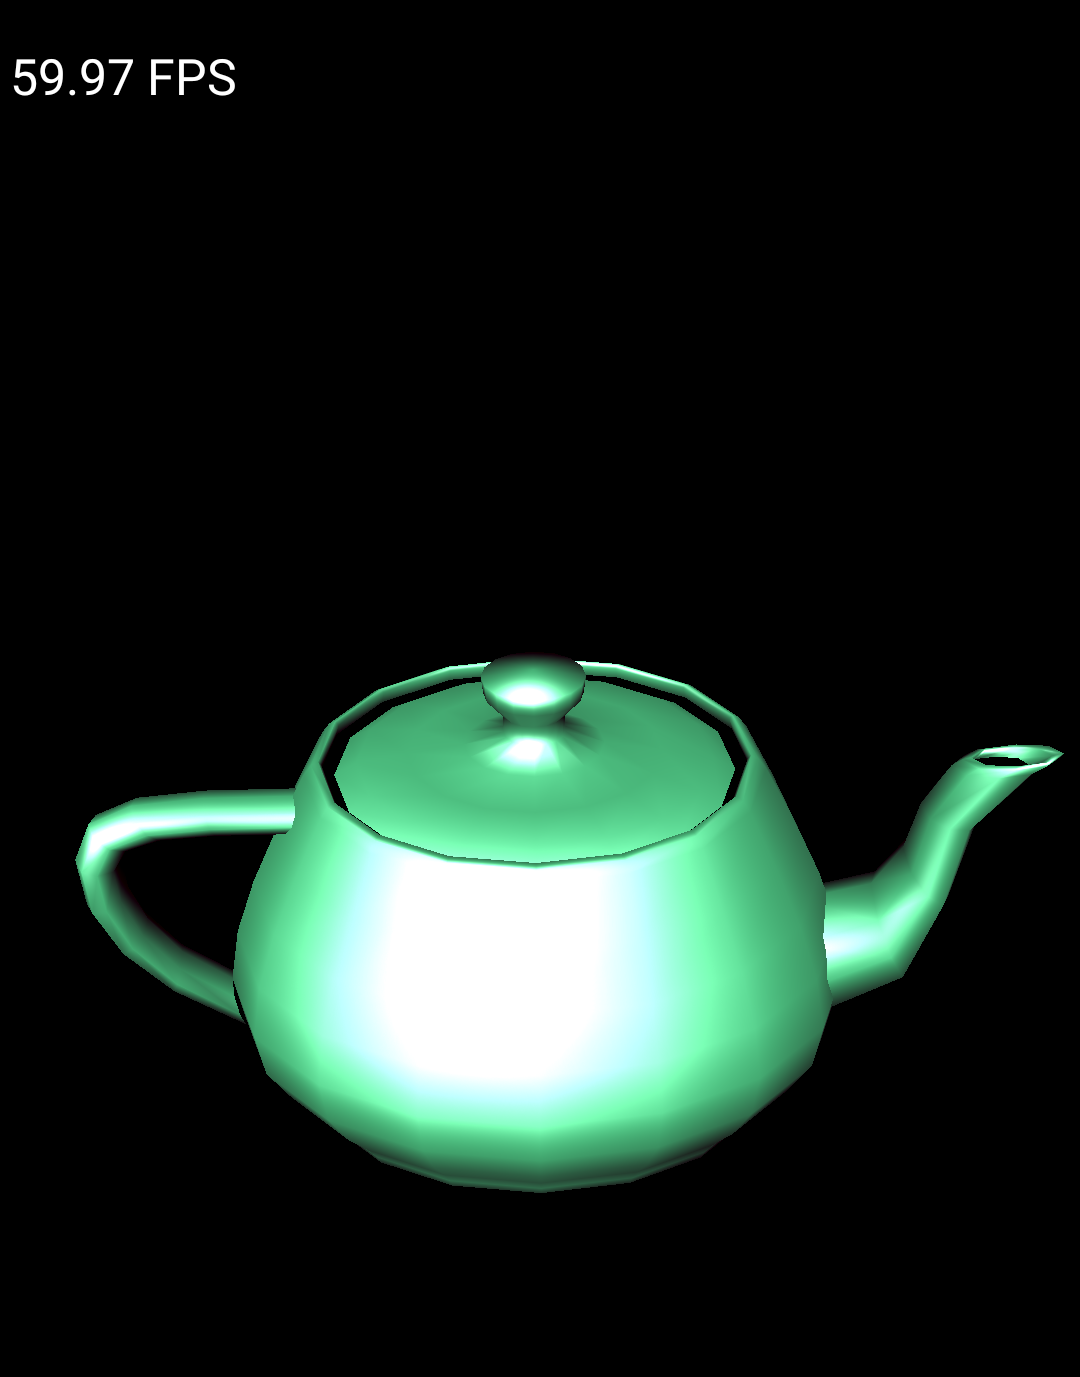 Esempio di Teapot in esecuzione su un emulatore